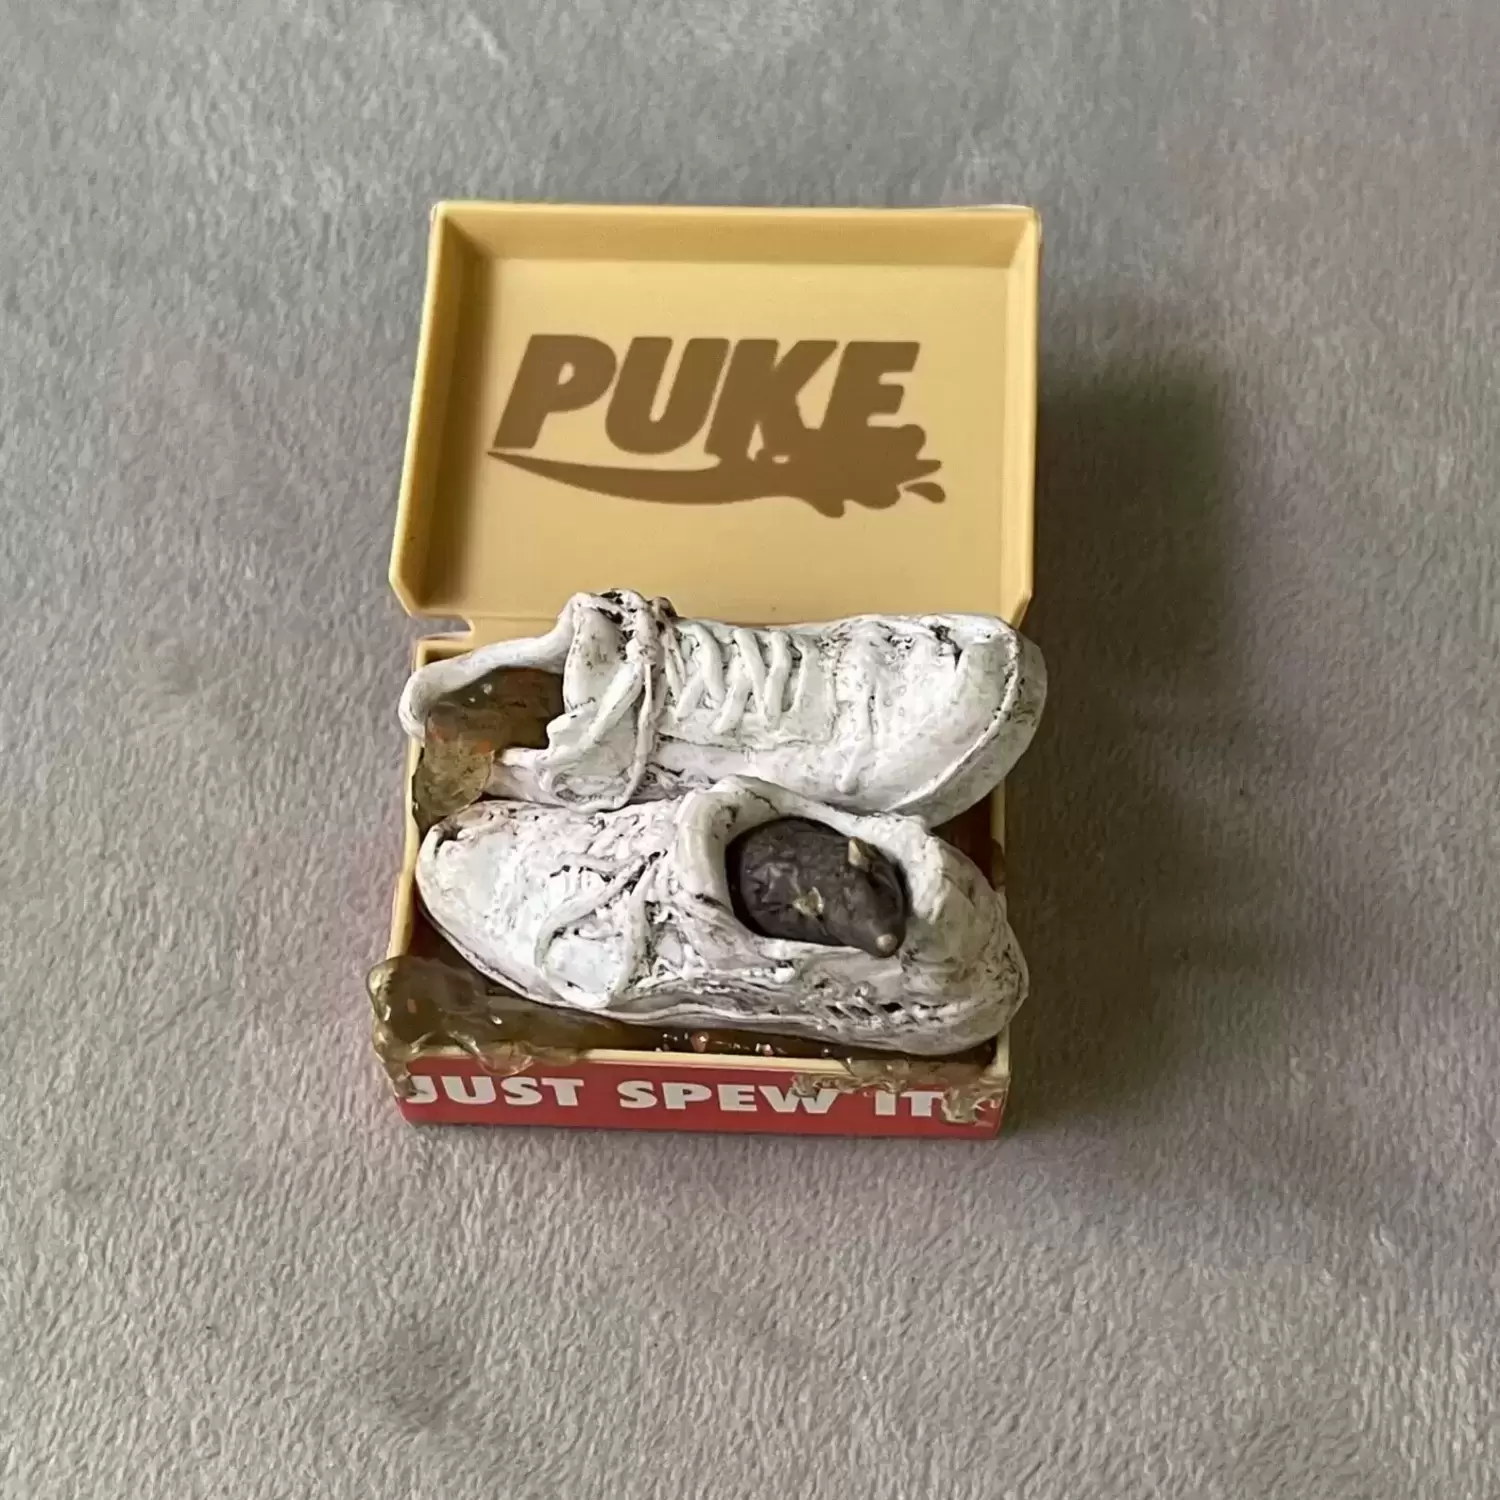 Puke Shoes - Mega Gross Minis action figure